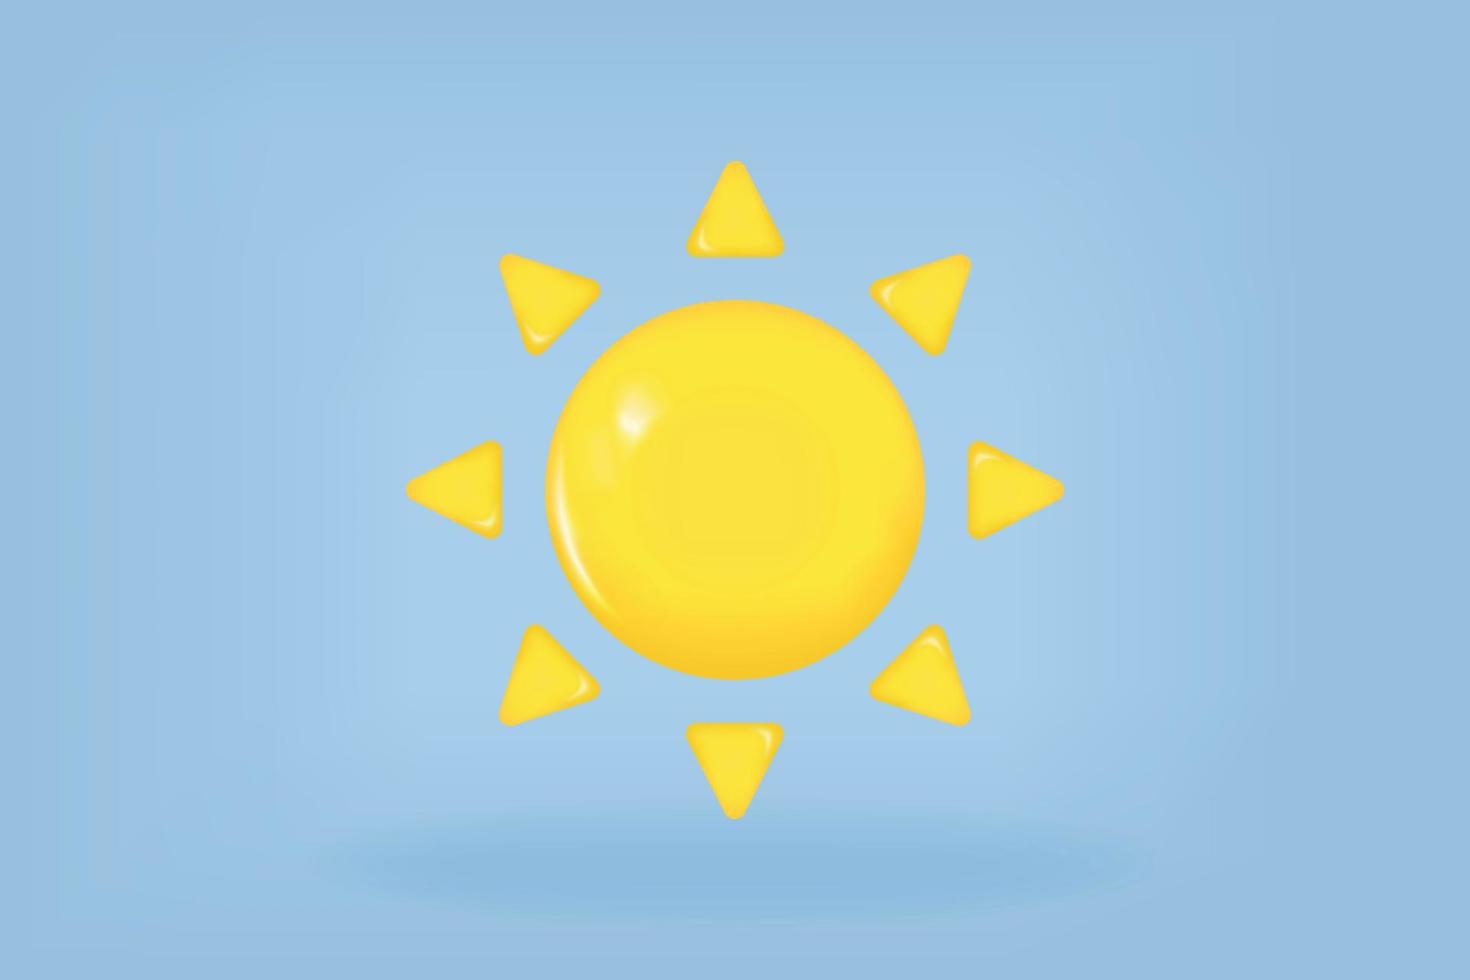 gelbe Sonne mit Strahlen, Sonnenstern. 3D-Rendervektorsymbol im Cartoon-Minimalstil. sommer, wetter, raumkonzept. vektor